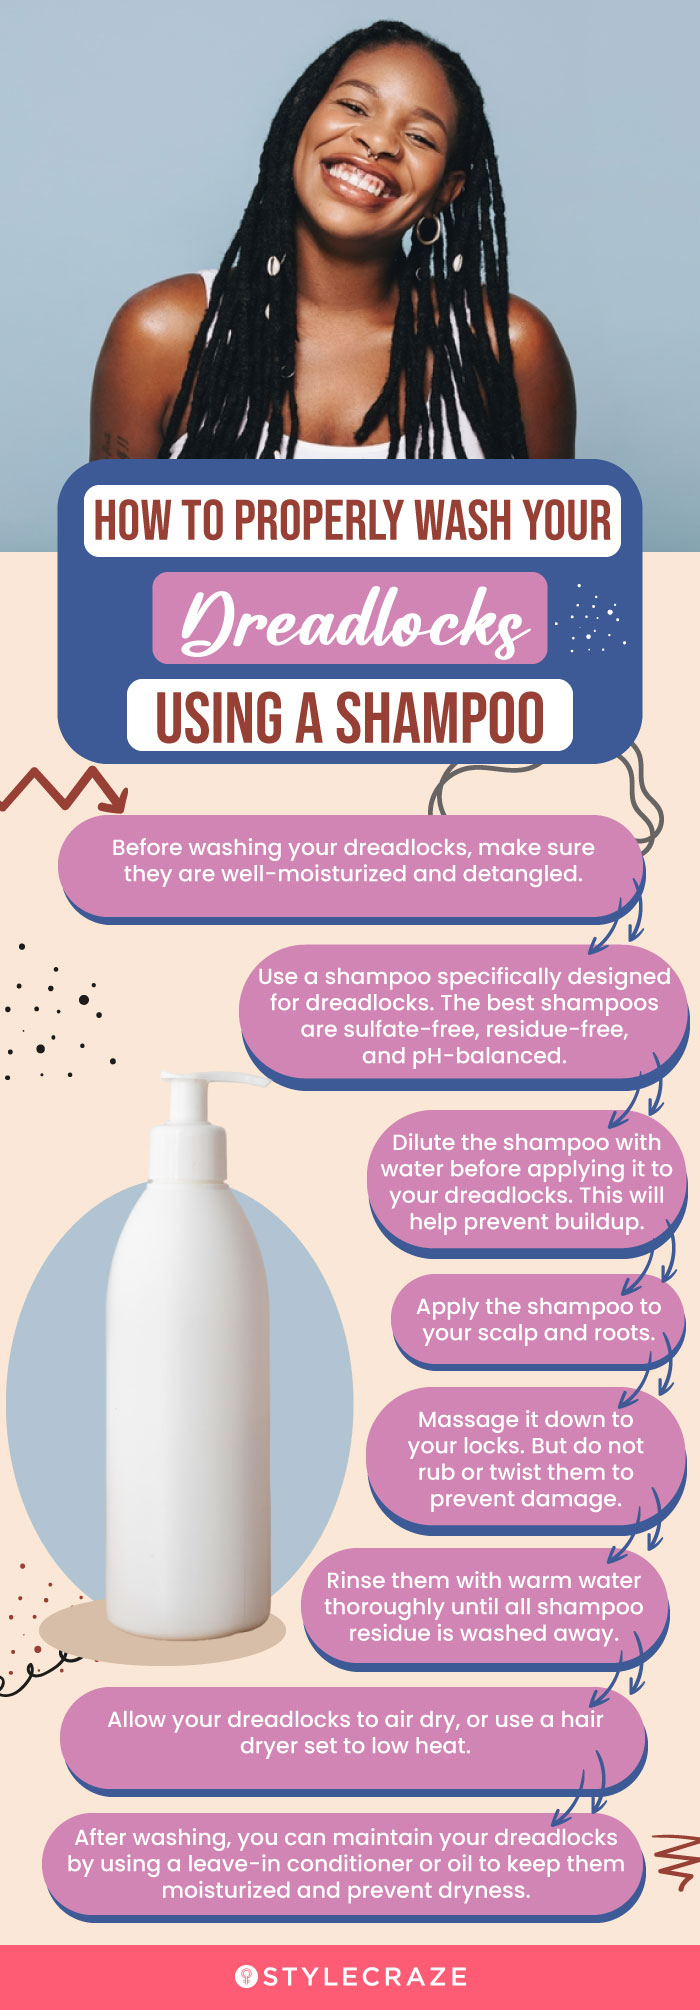 Dollylocks Shampoo | Tea Tree Spearmint